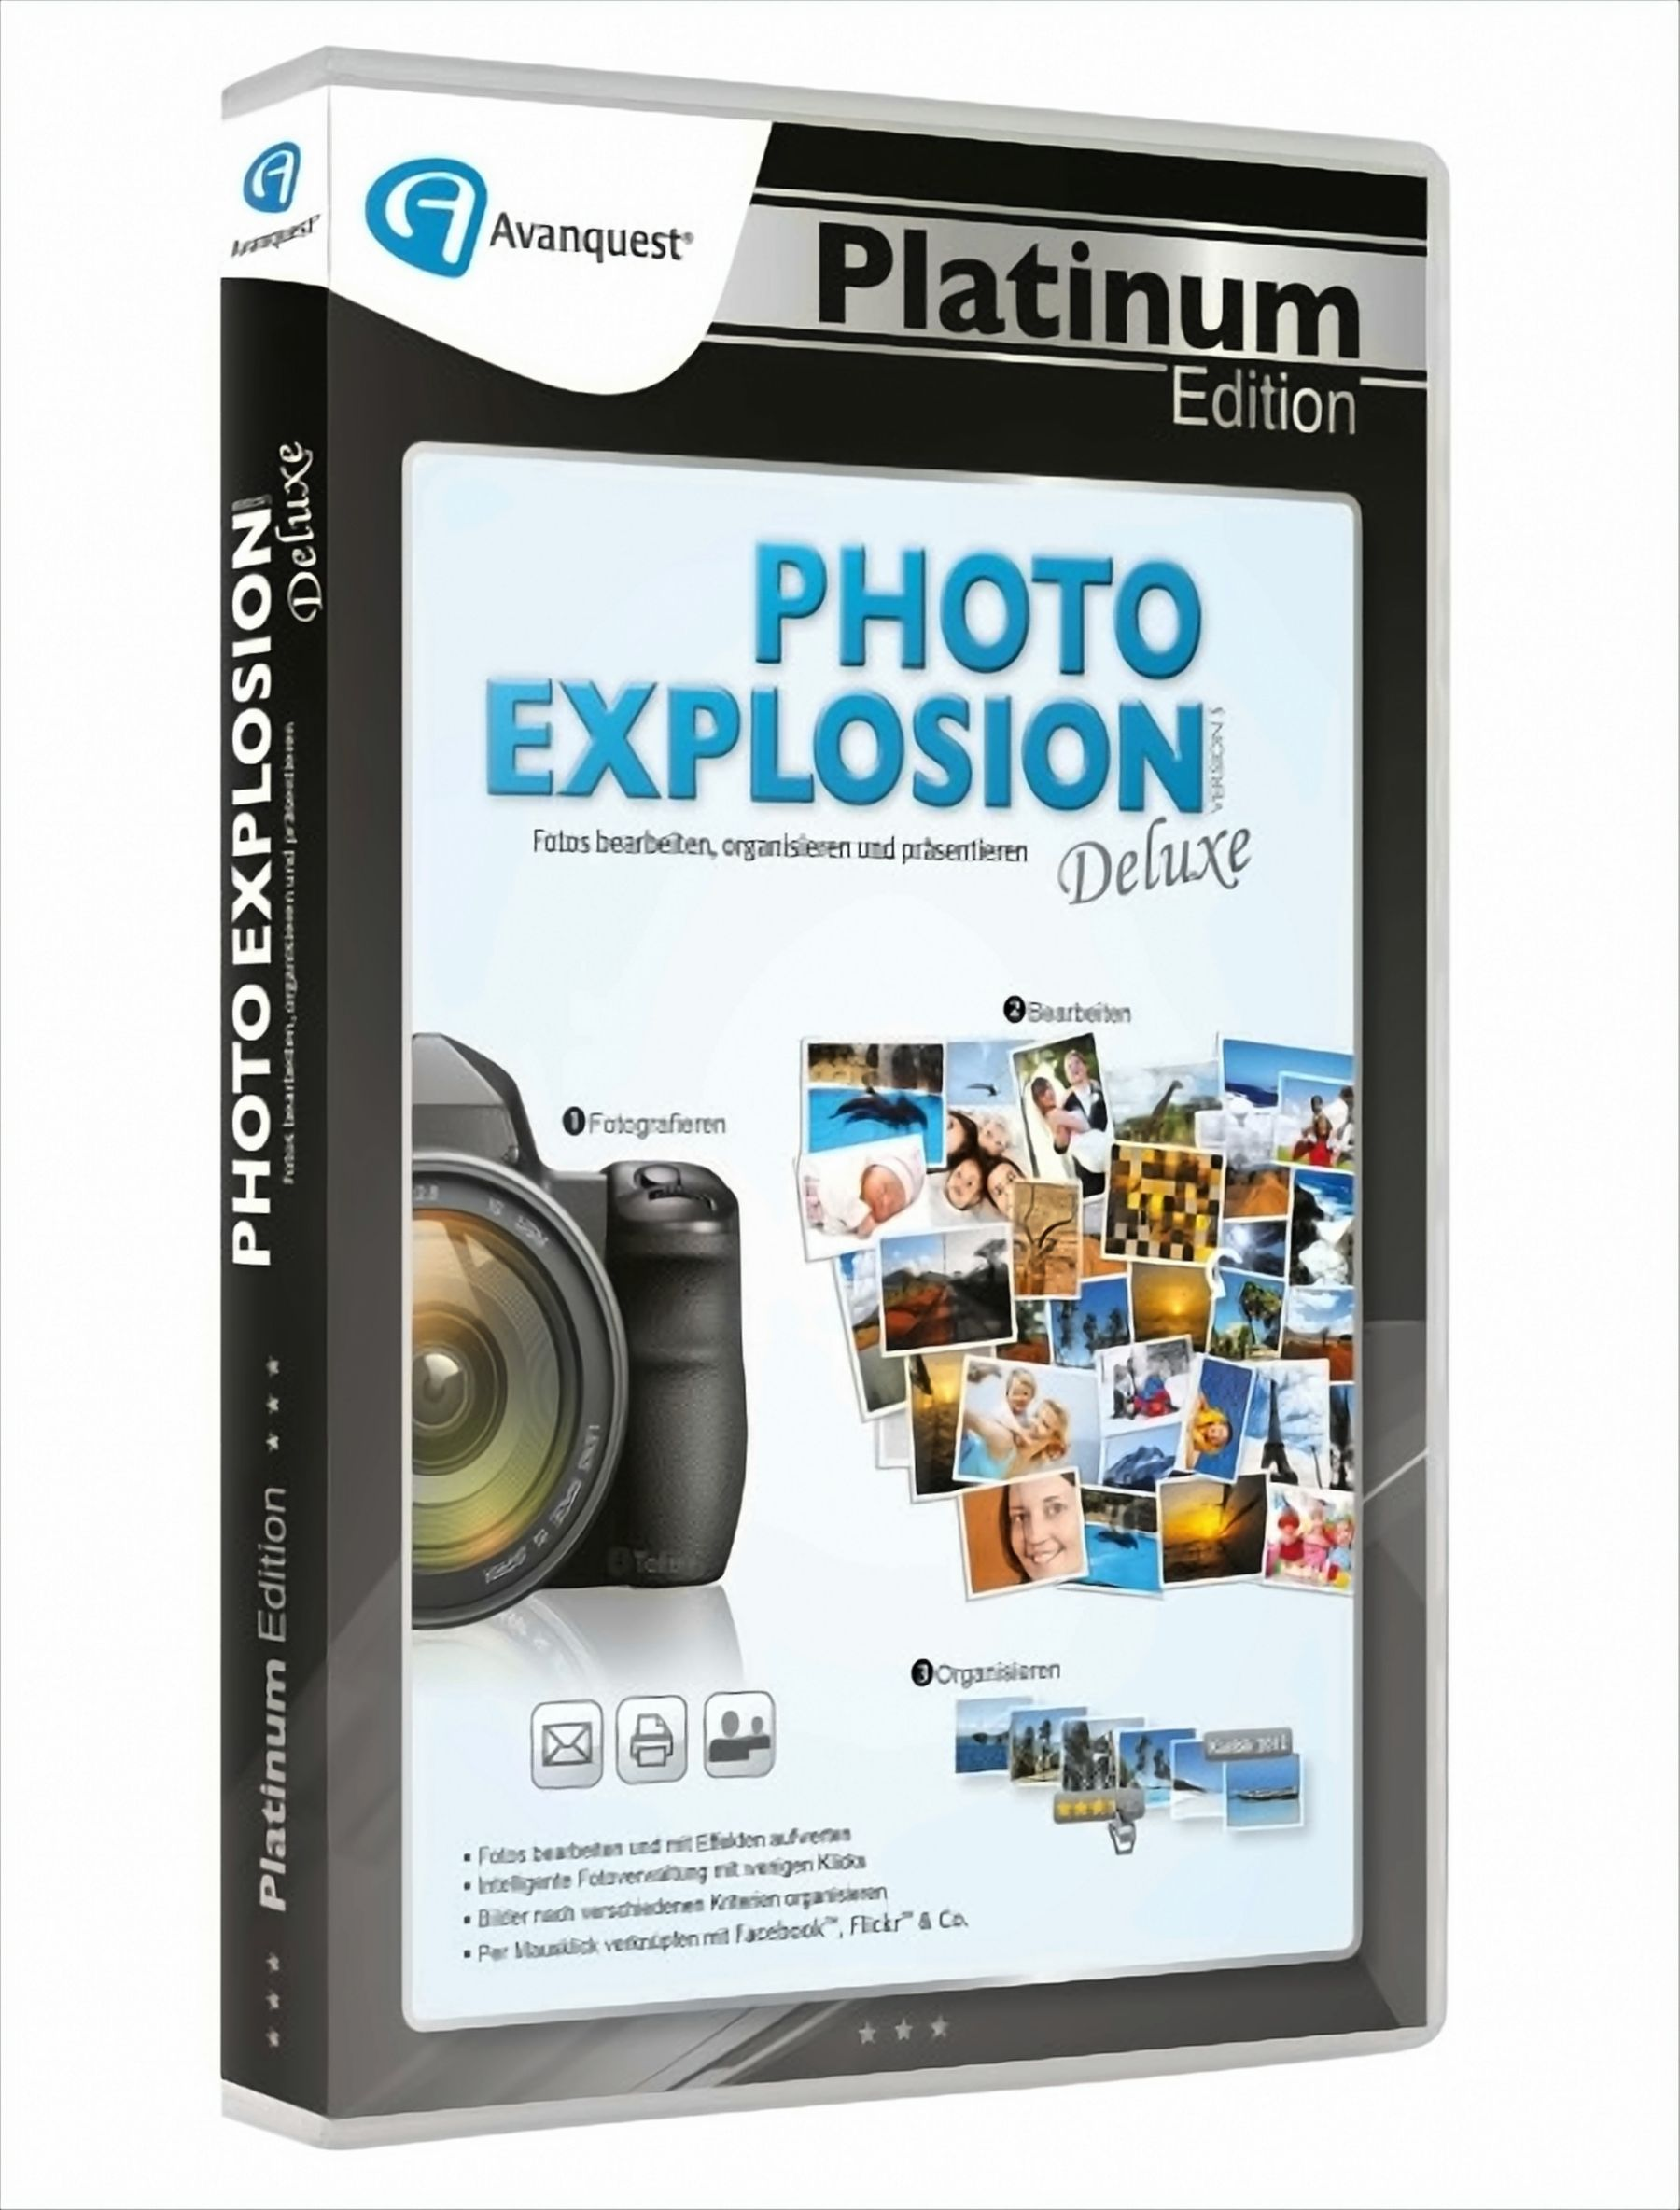 5 Explosion Avanquest - Platinum [PC] Photo Edition Deluxe